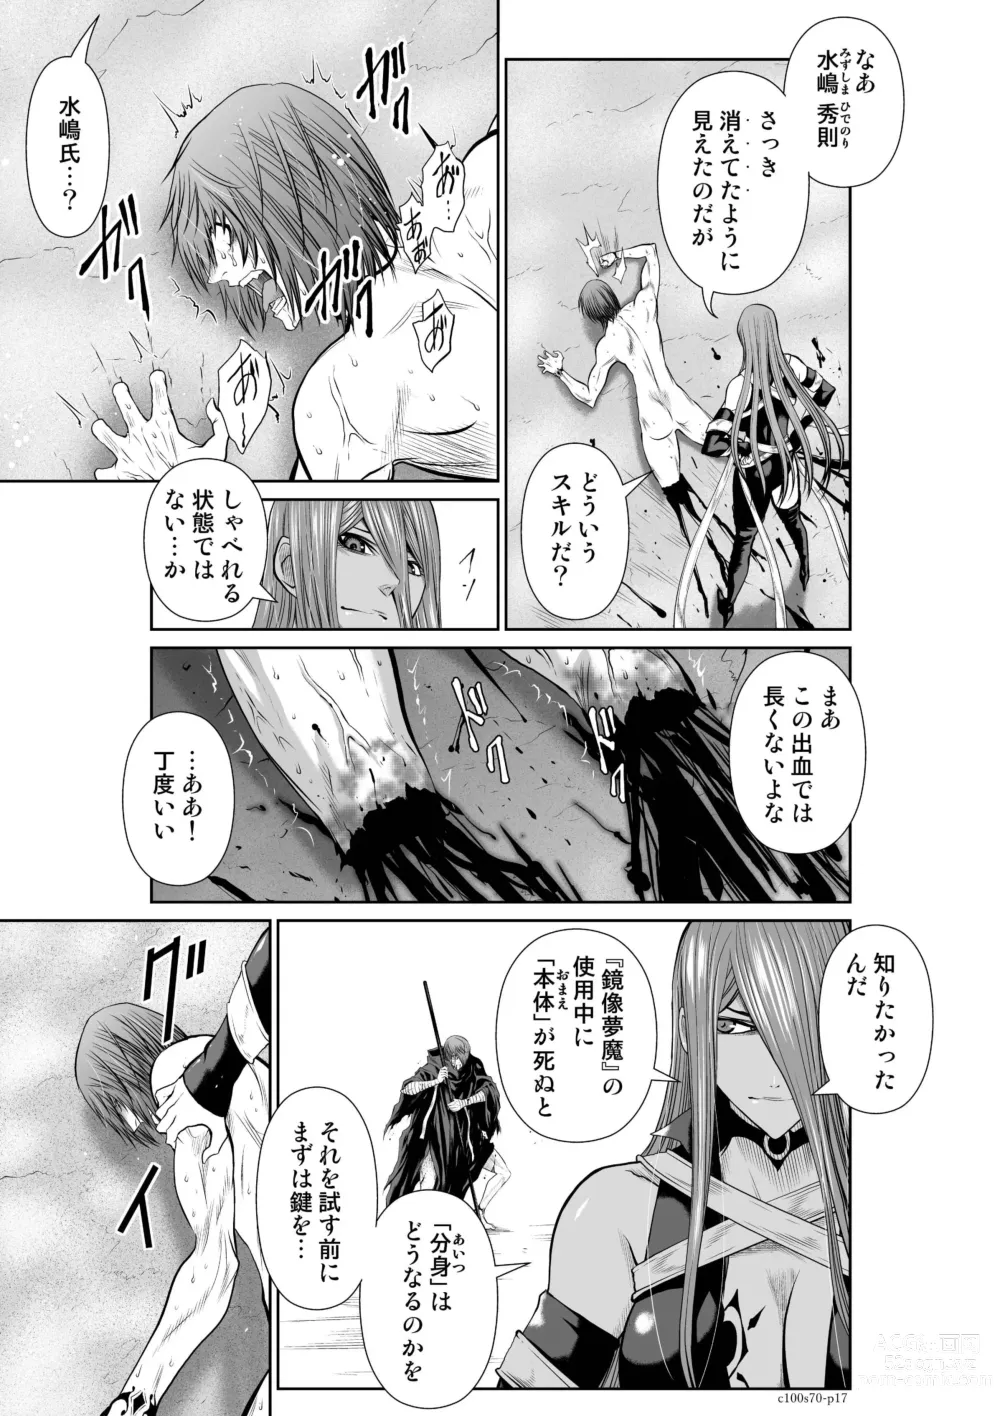 Page 535 of manga Chijou Hyakkai Ch61-70